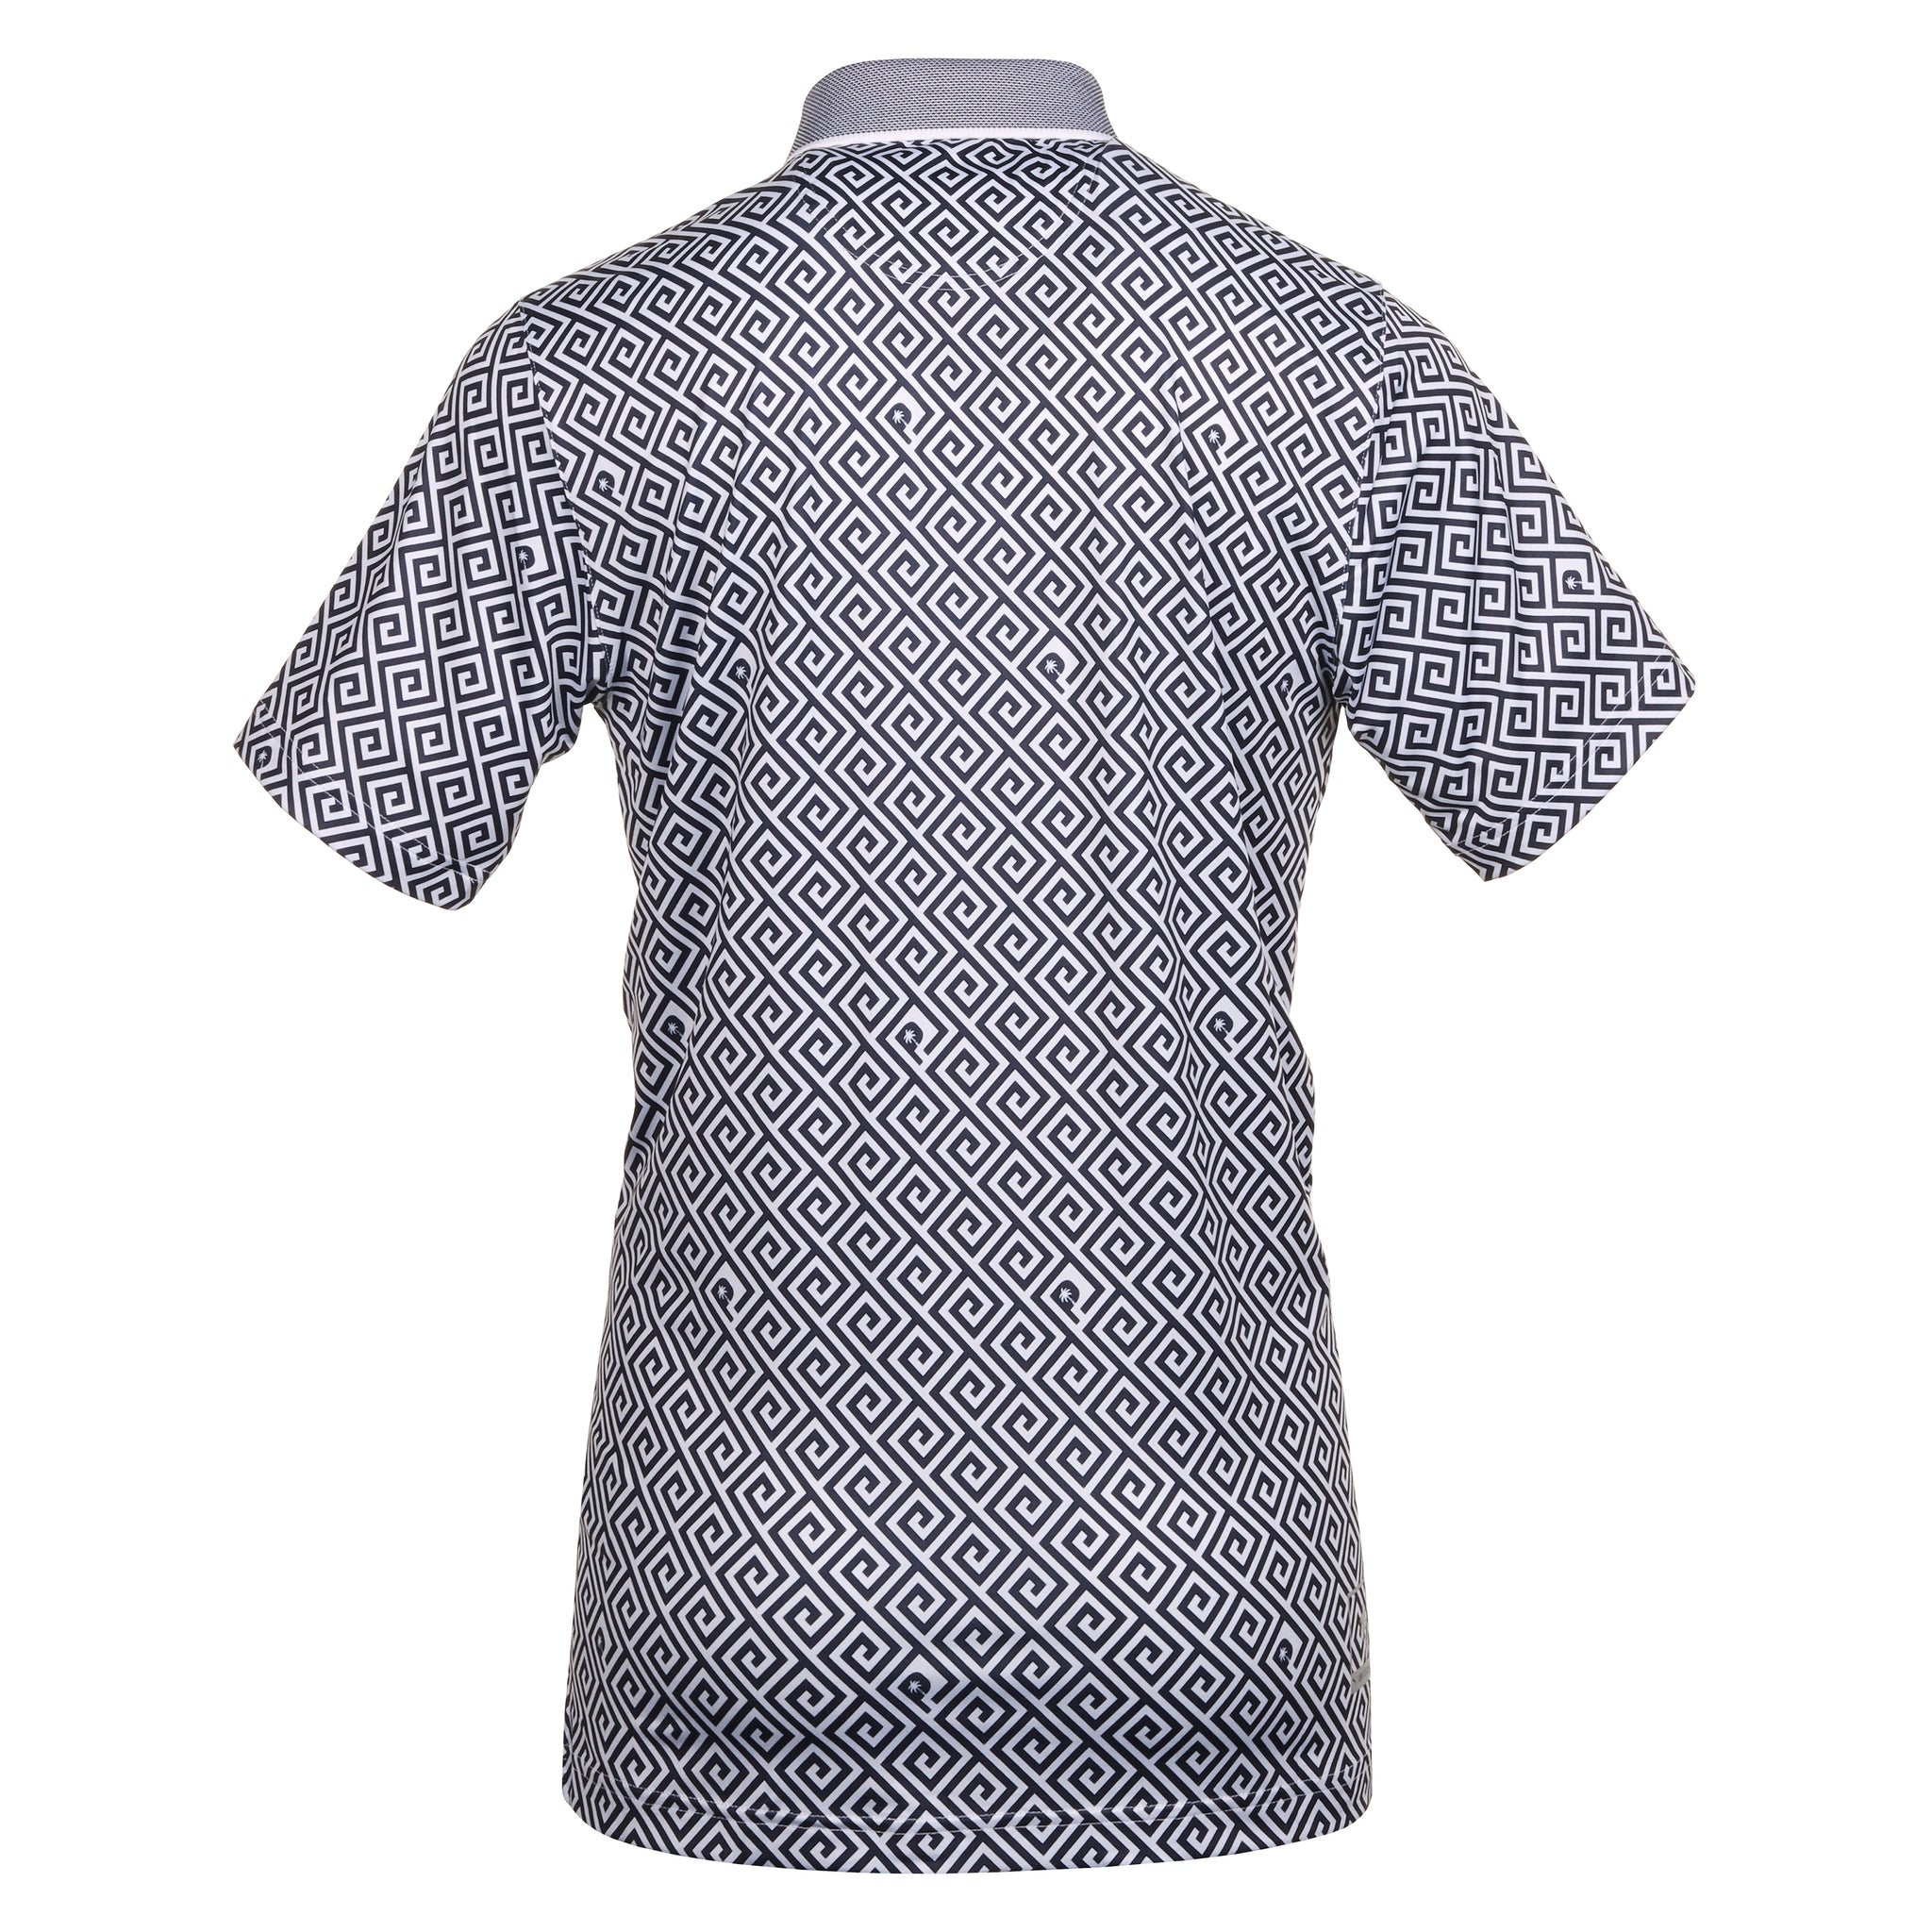 puma-golf-x-ptc-resort-shirt-623963-deep-navy-white-glow-01